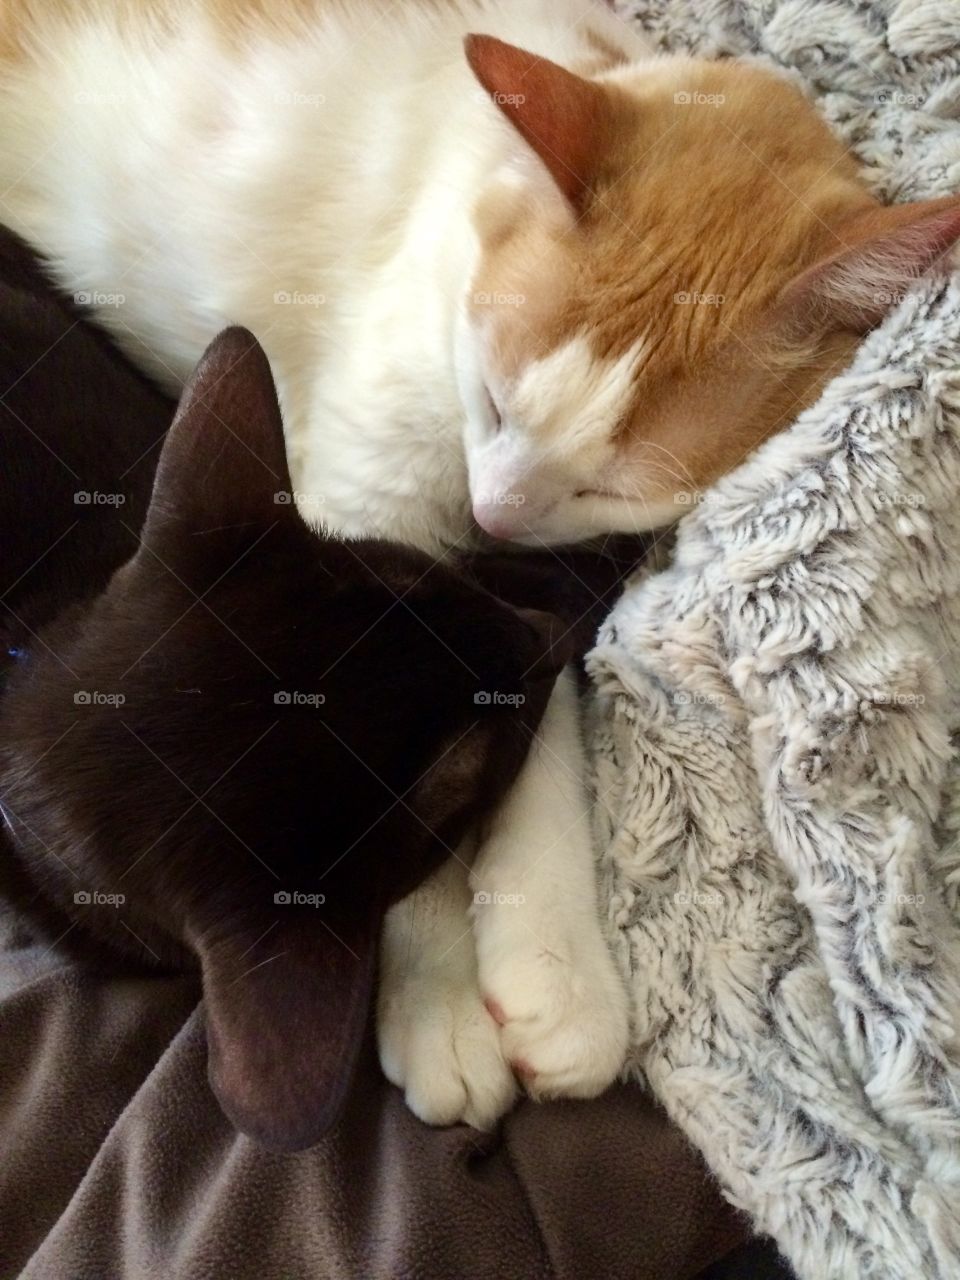 Kitties snuggle